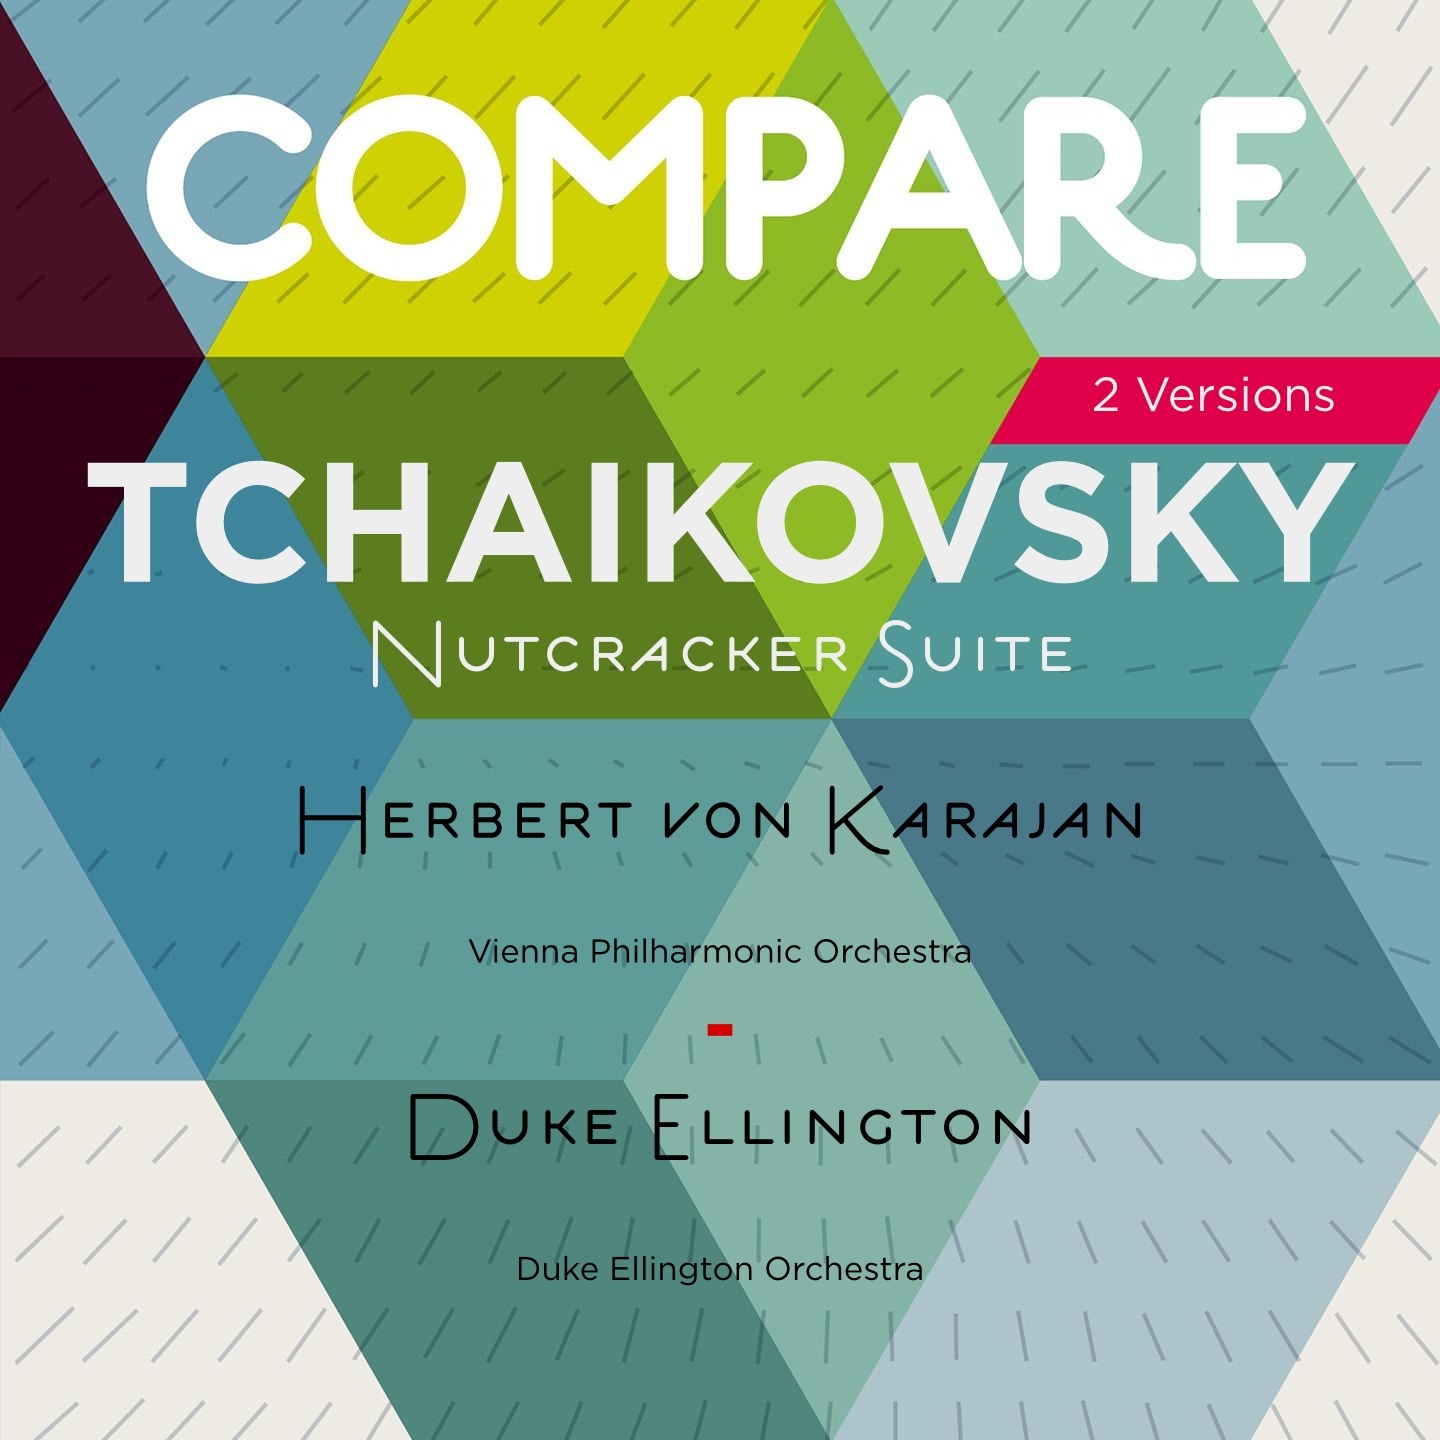 Tchaikovsky: The Nutcracker, Suite, Herbert von Karajan vs. Duke Ellington